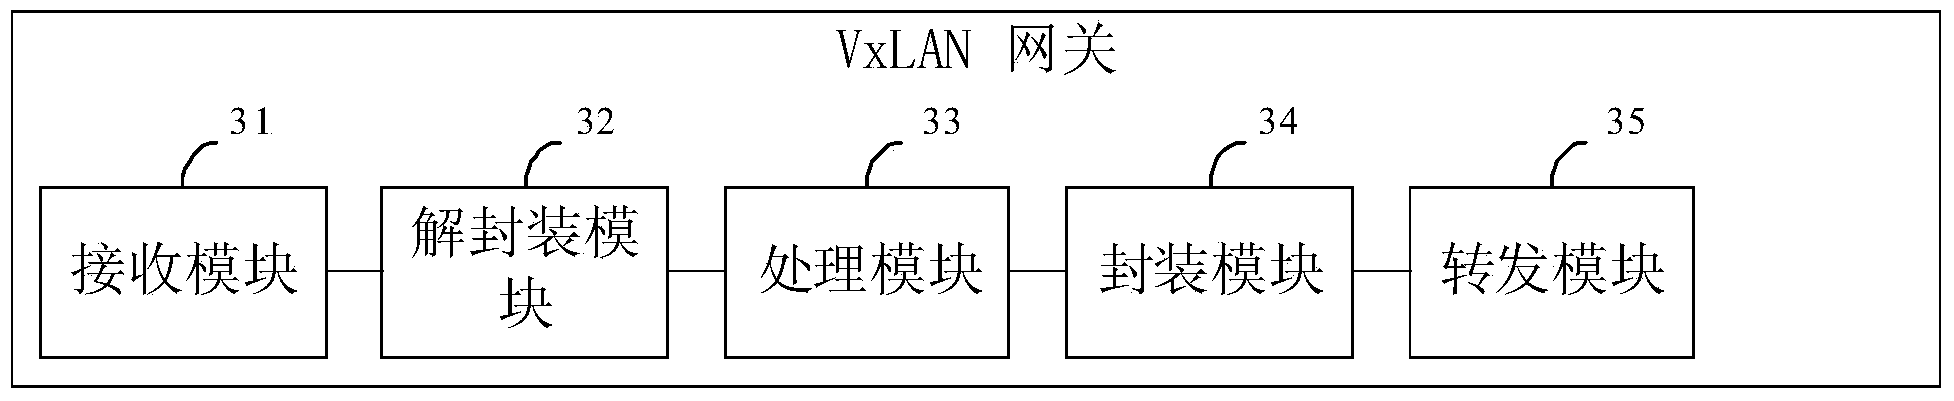 Packet forwarding method and VxLAN gateway